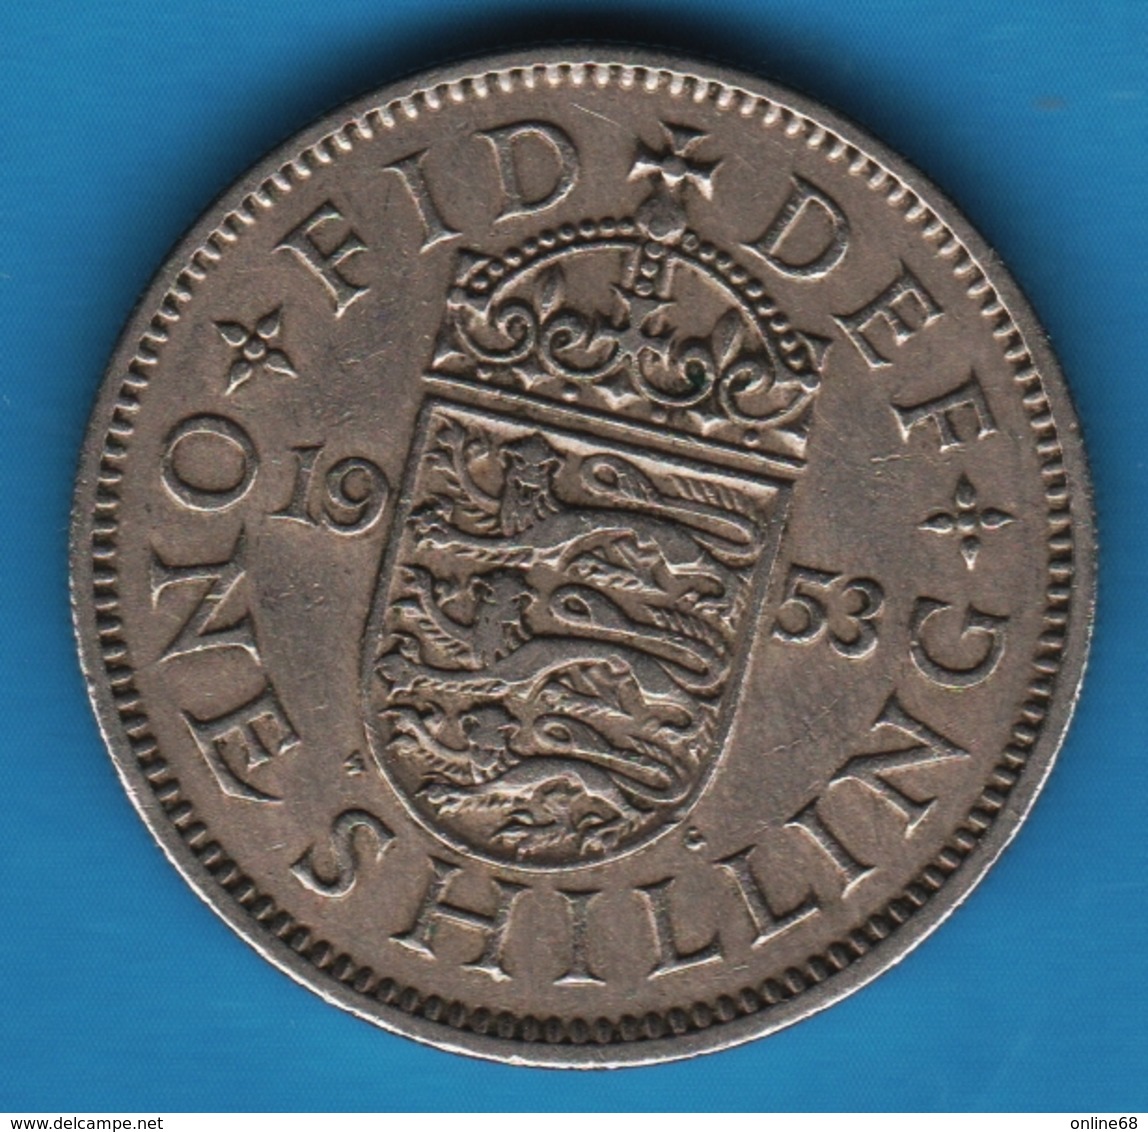 UK 1 SHILLING 1953 KM# 876 ENGLISH SHIELD QEII - I. 1 Shilling